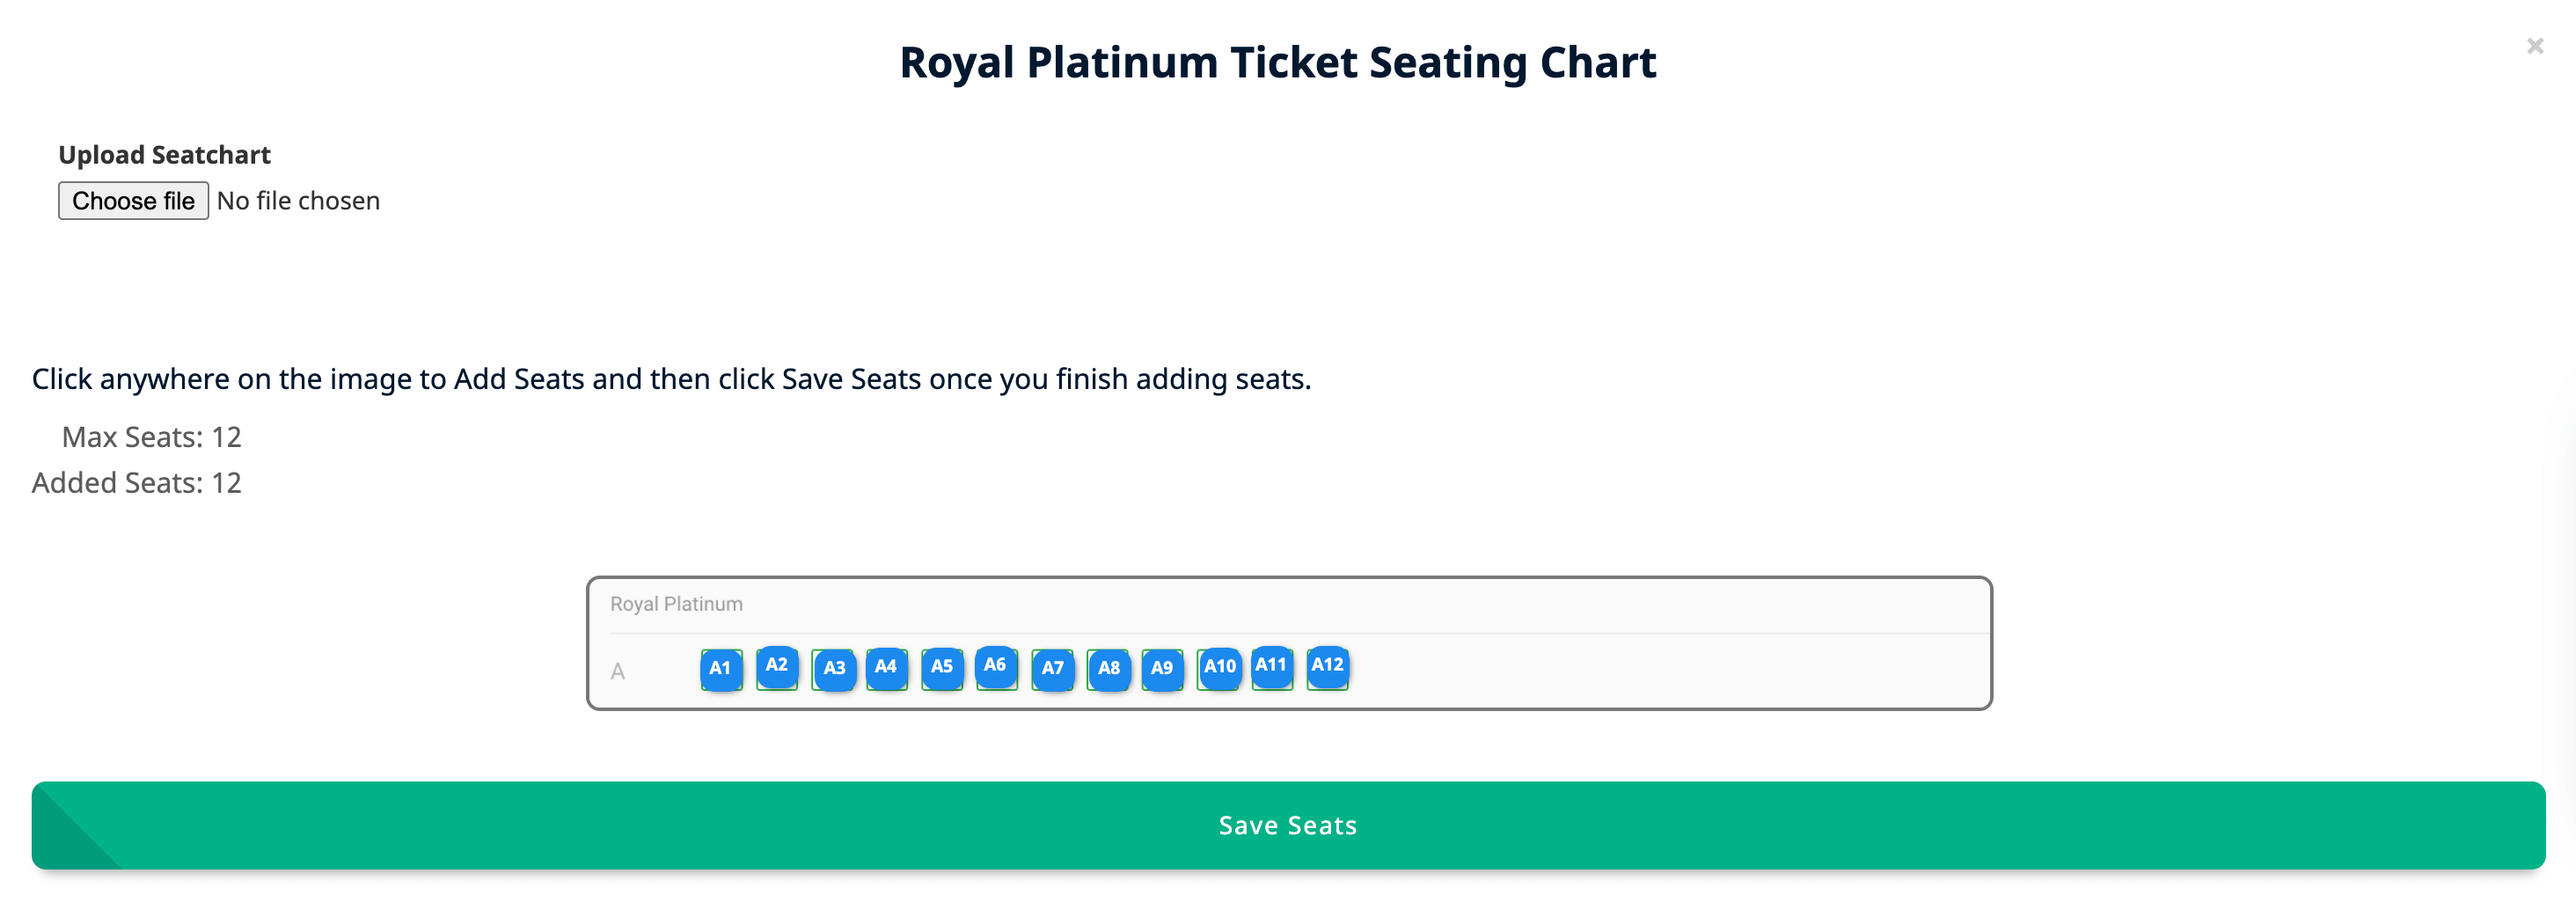 14-seating-royal-platinum